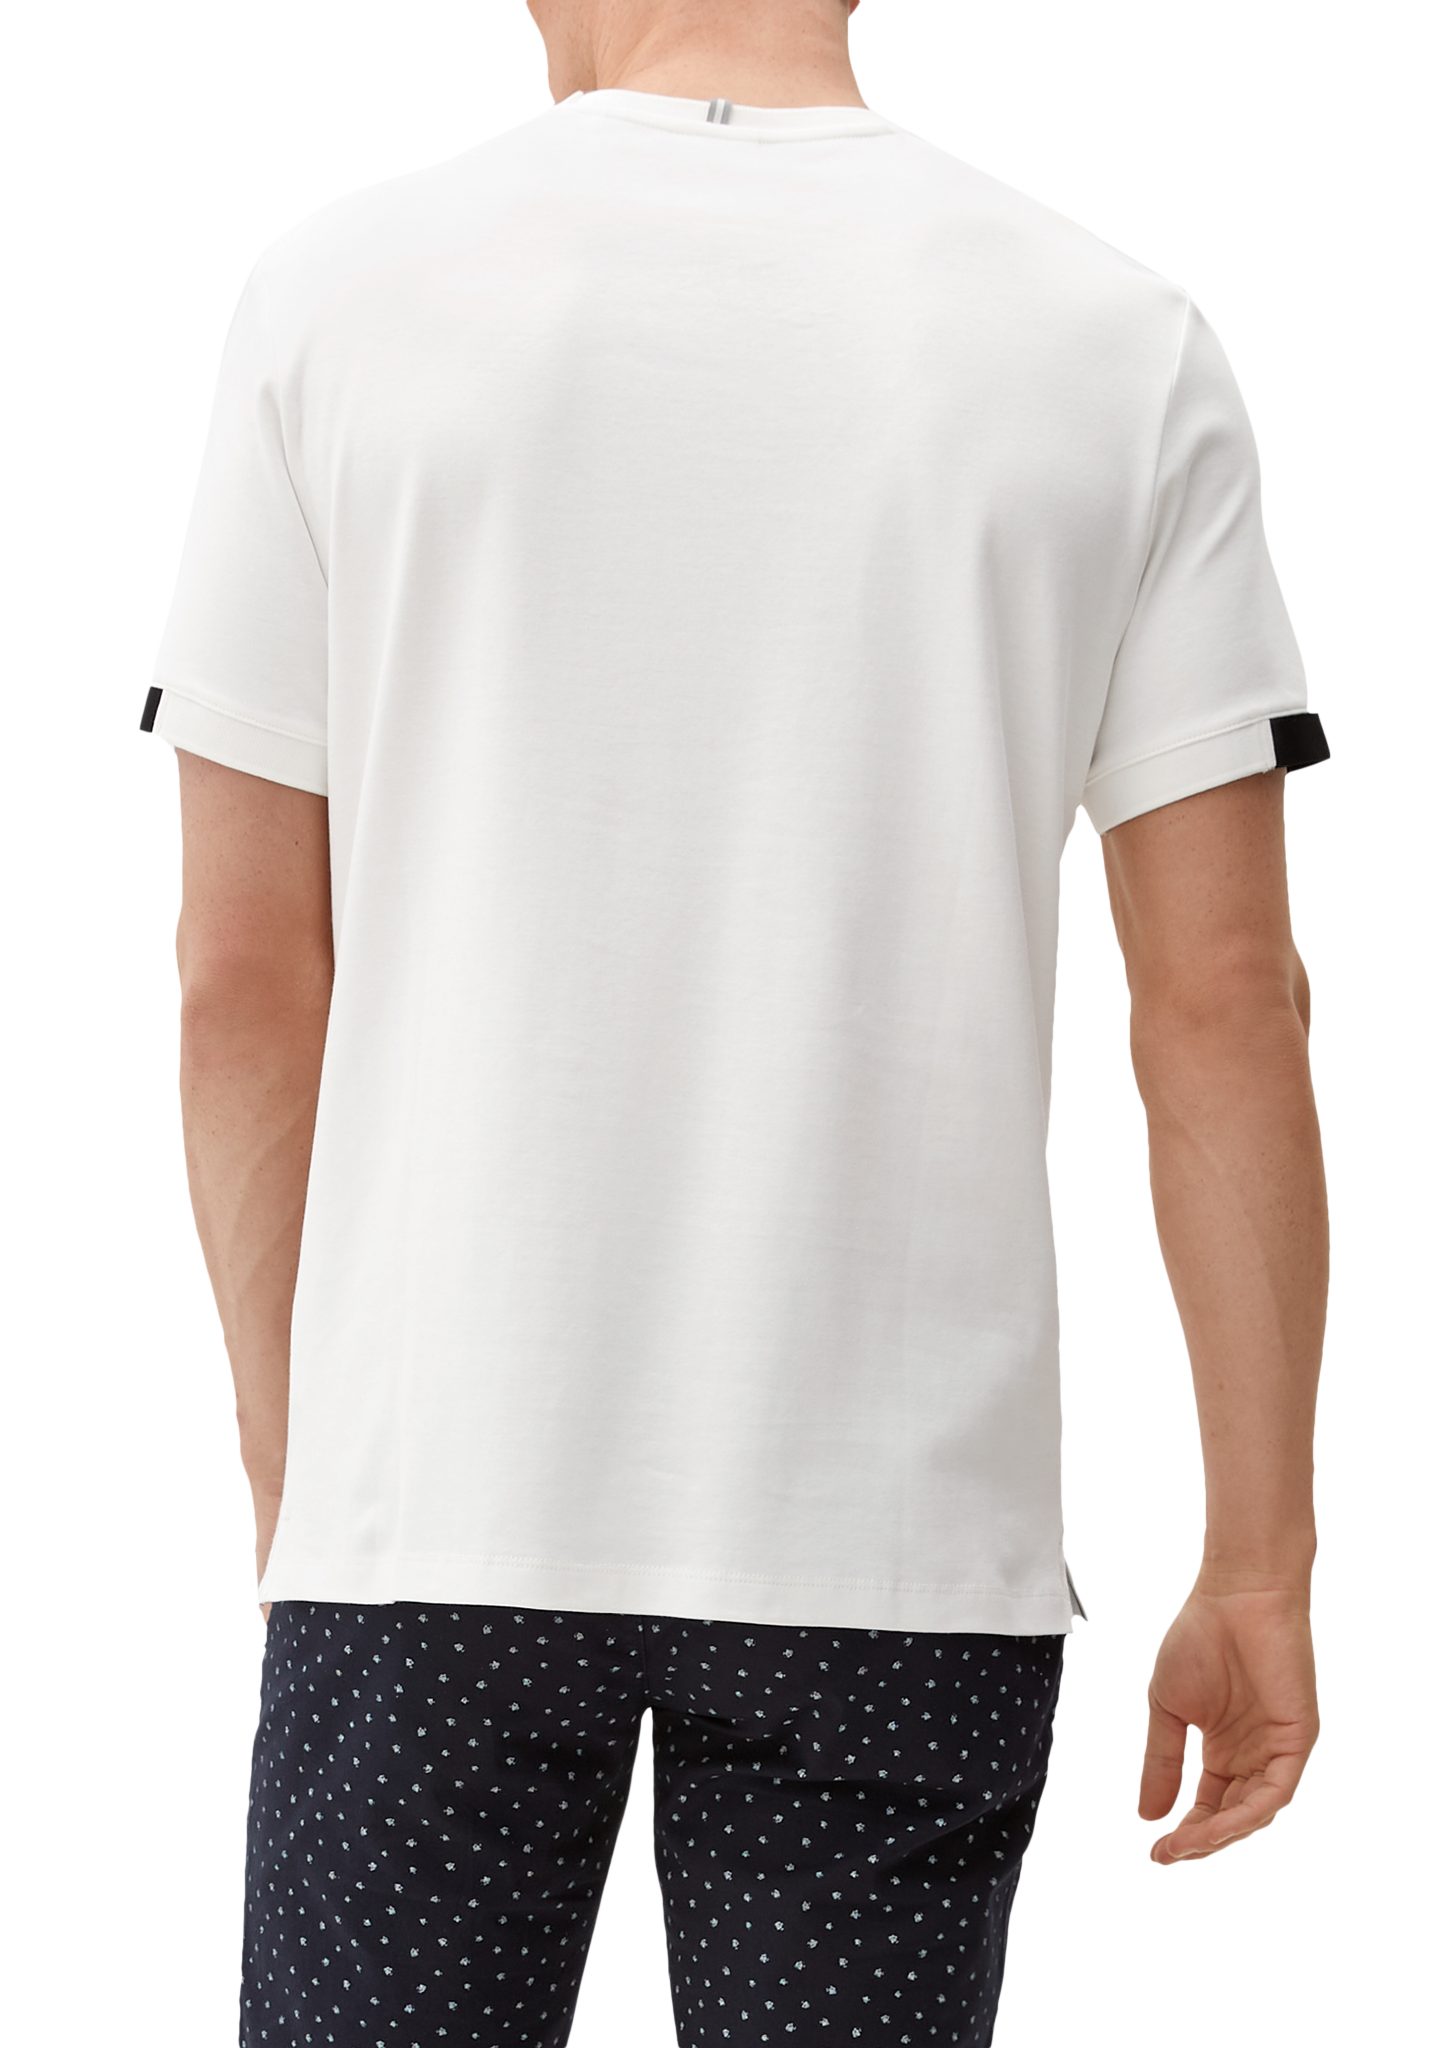 mit s.Oliver Labelpatch Label-Patch, weiß Kontrast-Details T-Shirt Kurzarmshirt